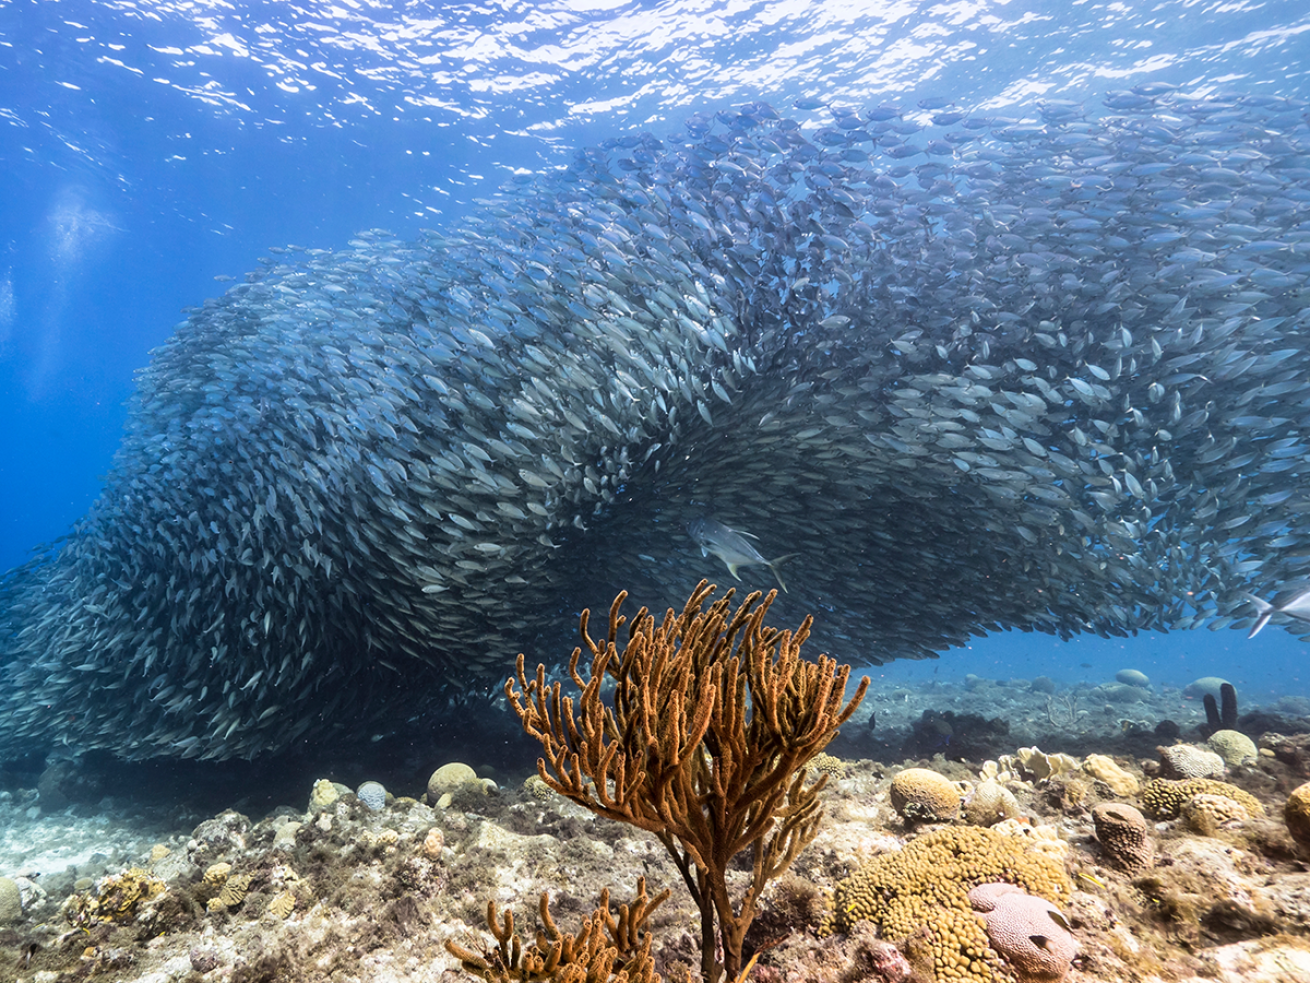 School of mackerel swimming around coral.